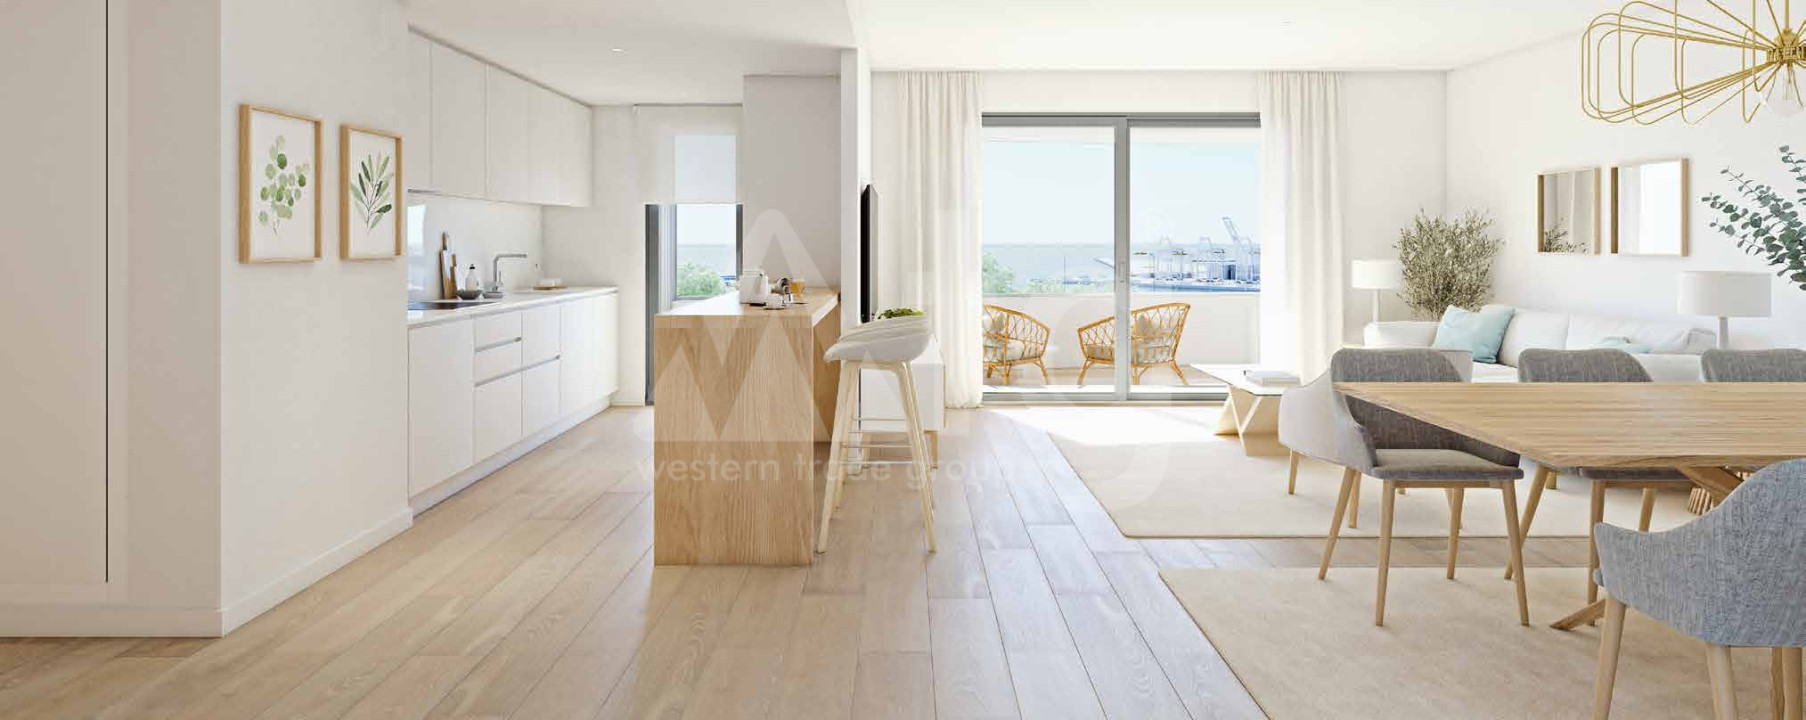 3 bedroom Apartment in Alicante - AEH25892 - 3